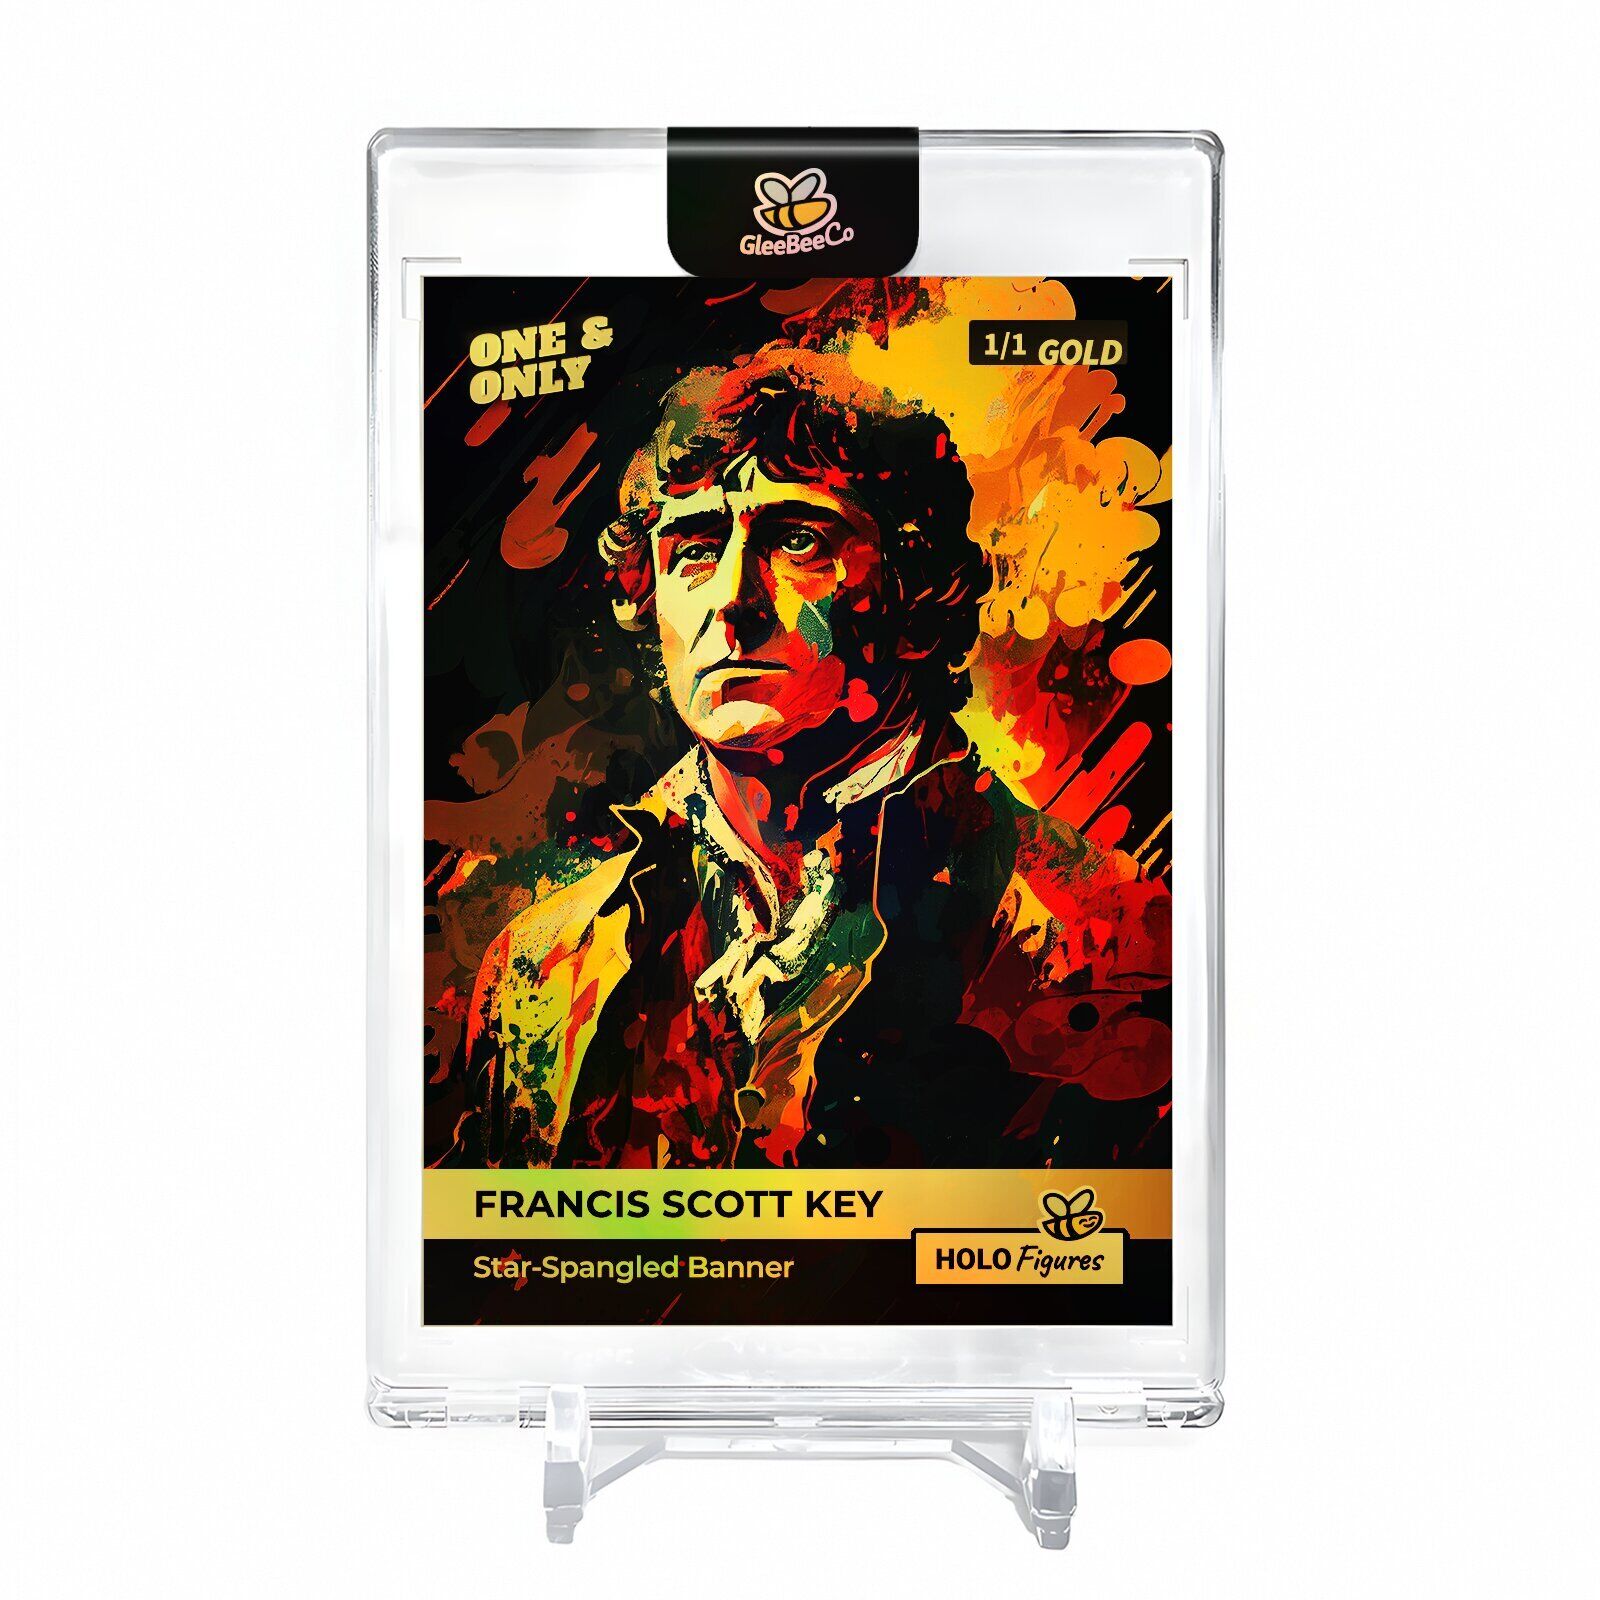 FRANCIS SCOTT KEY Star-Spangled Banner Trading Card GBC #FSSB *GOLD* Encased 1/1